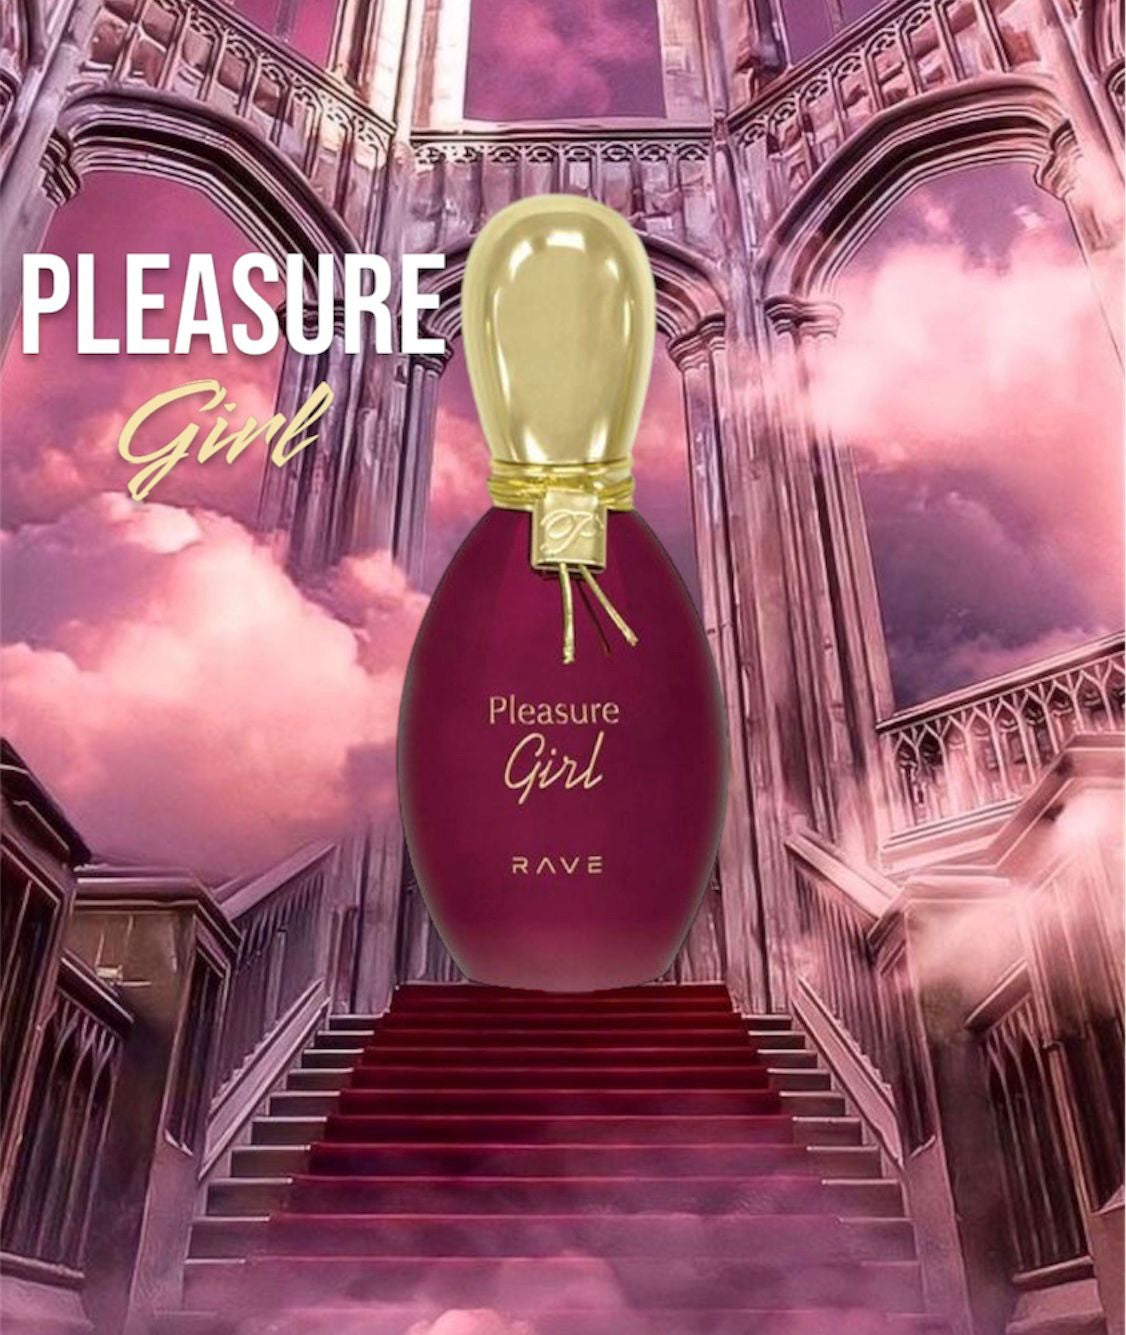 Pleasure girl